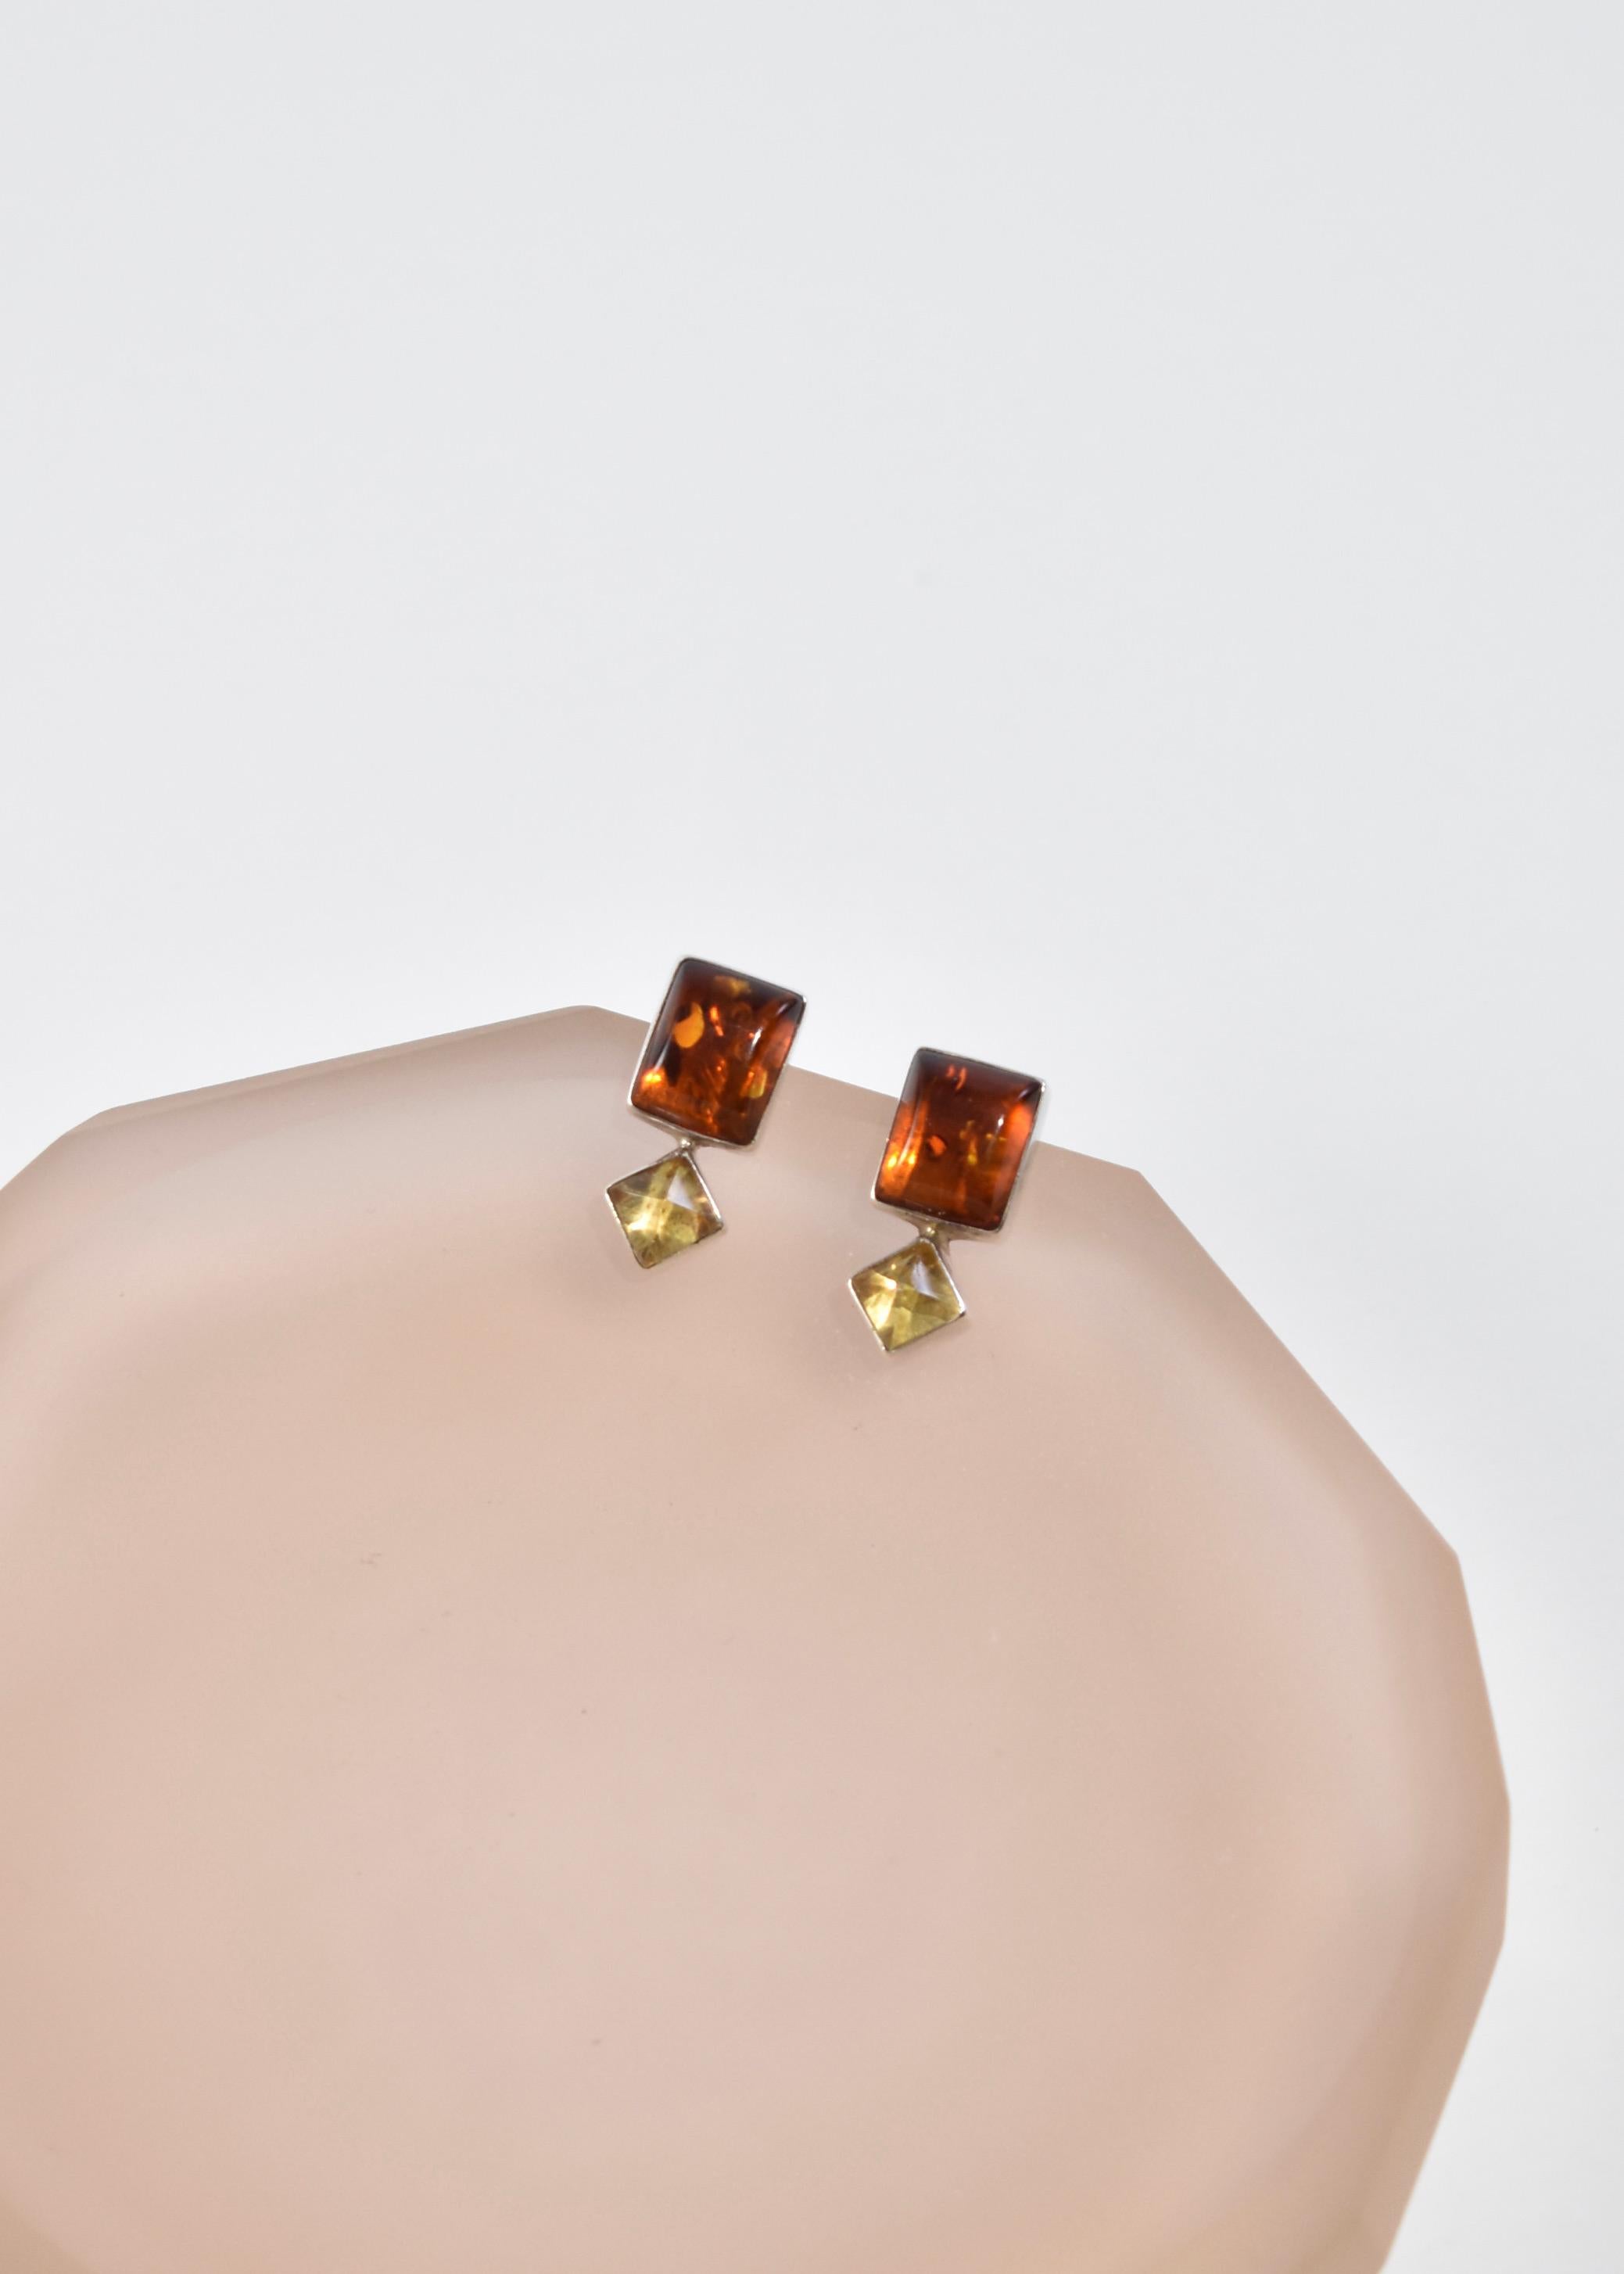 Modernist Geometric Amber Earrings